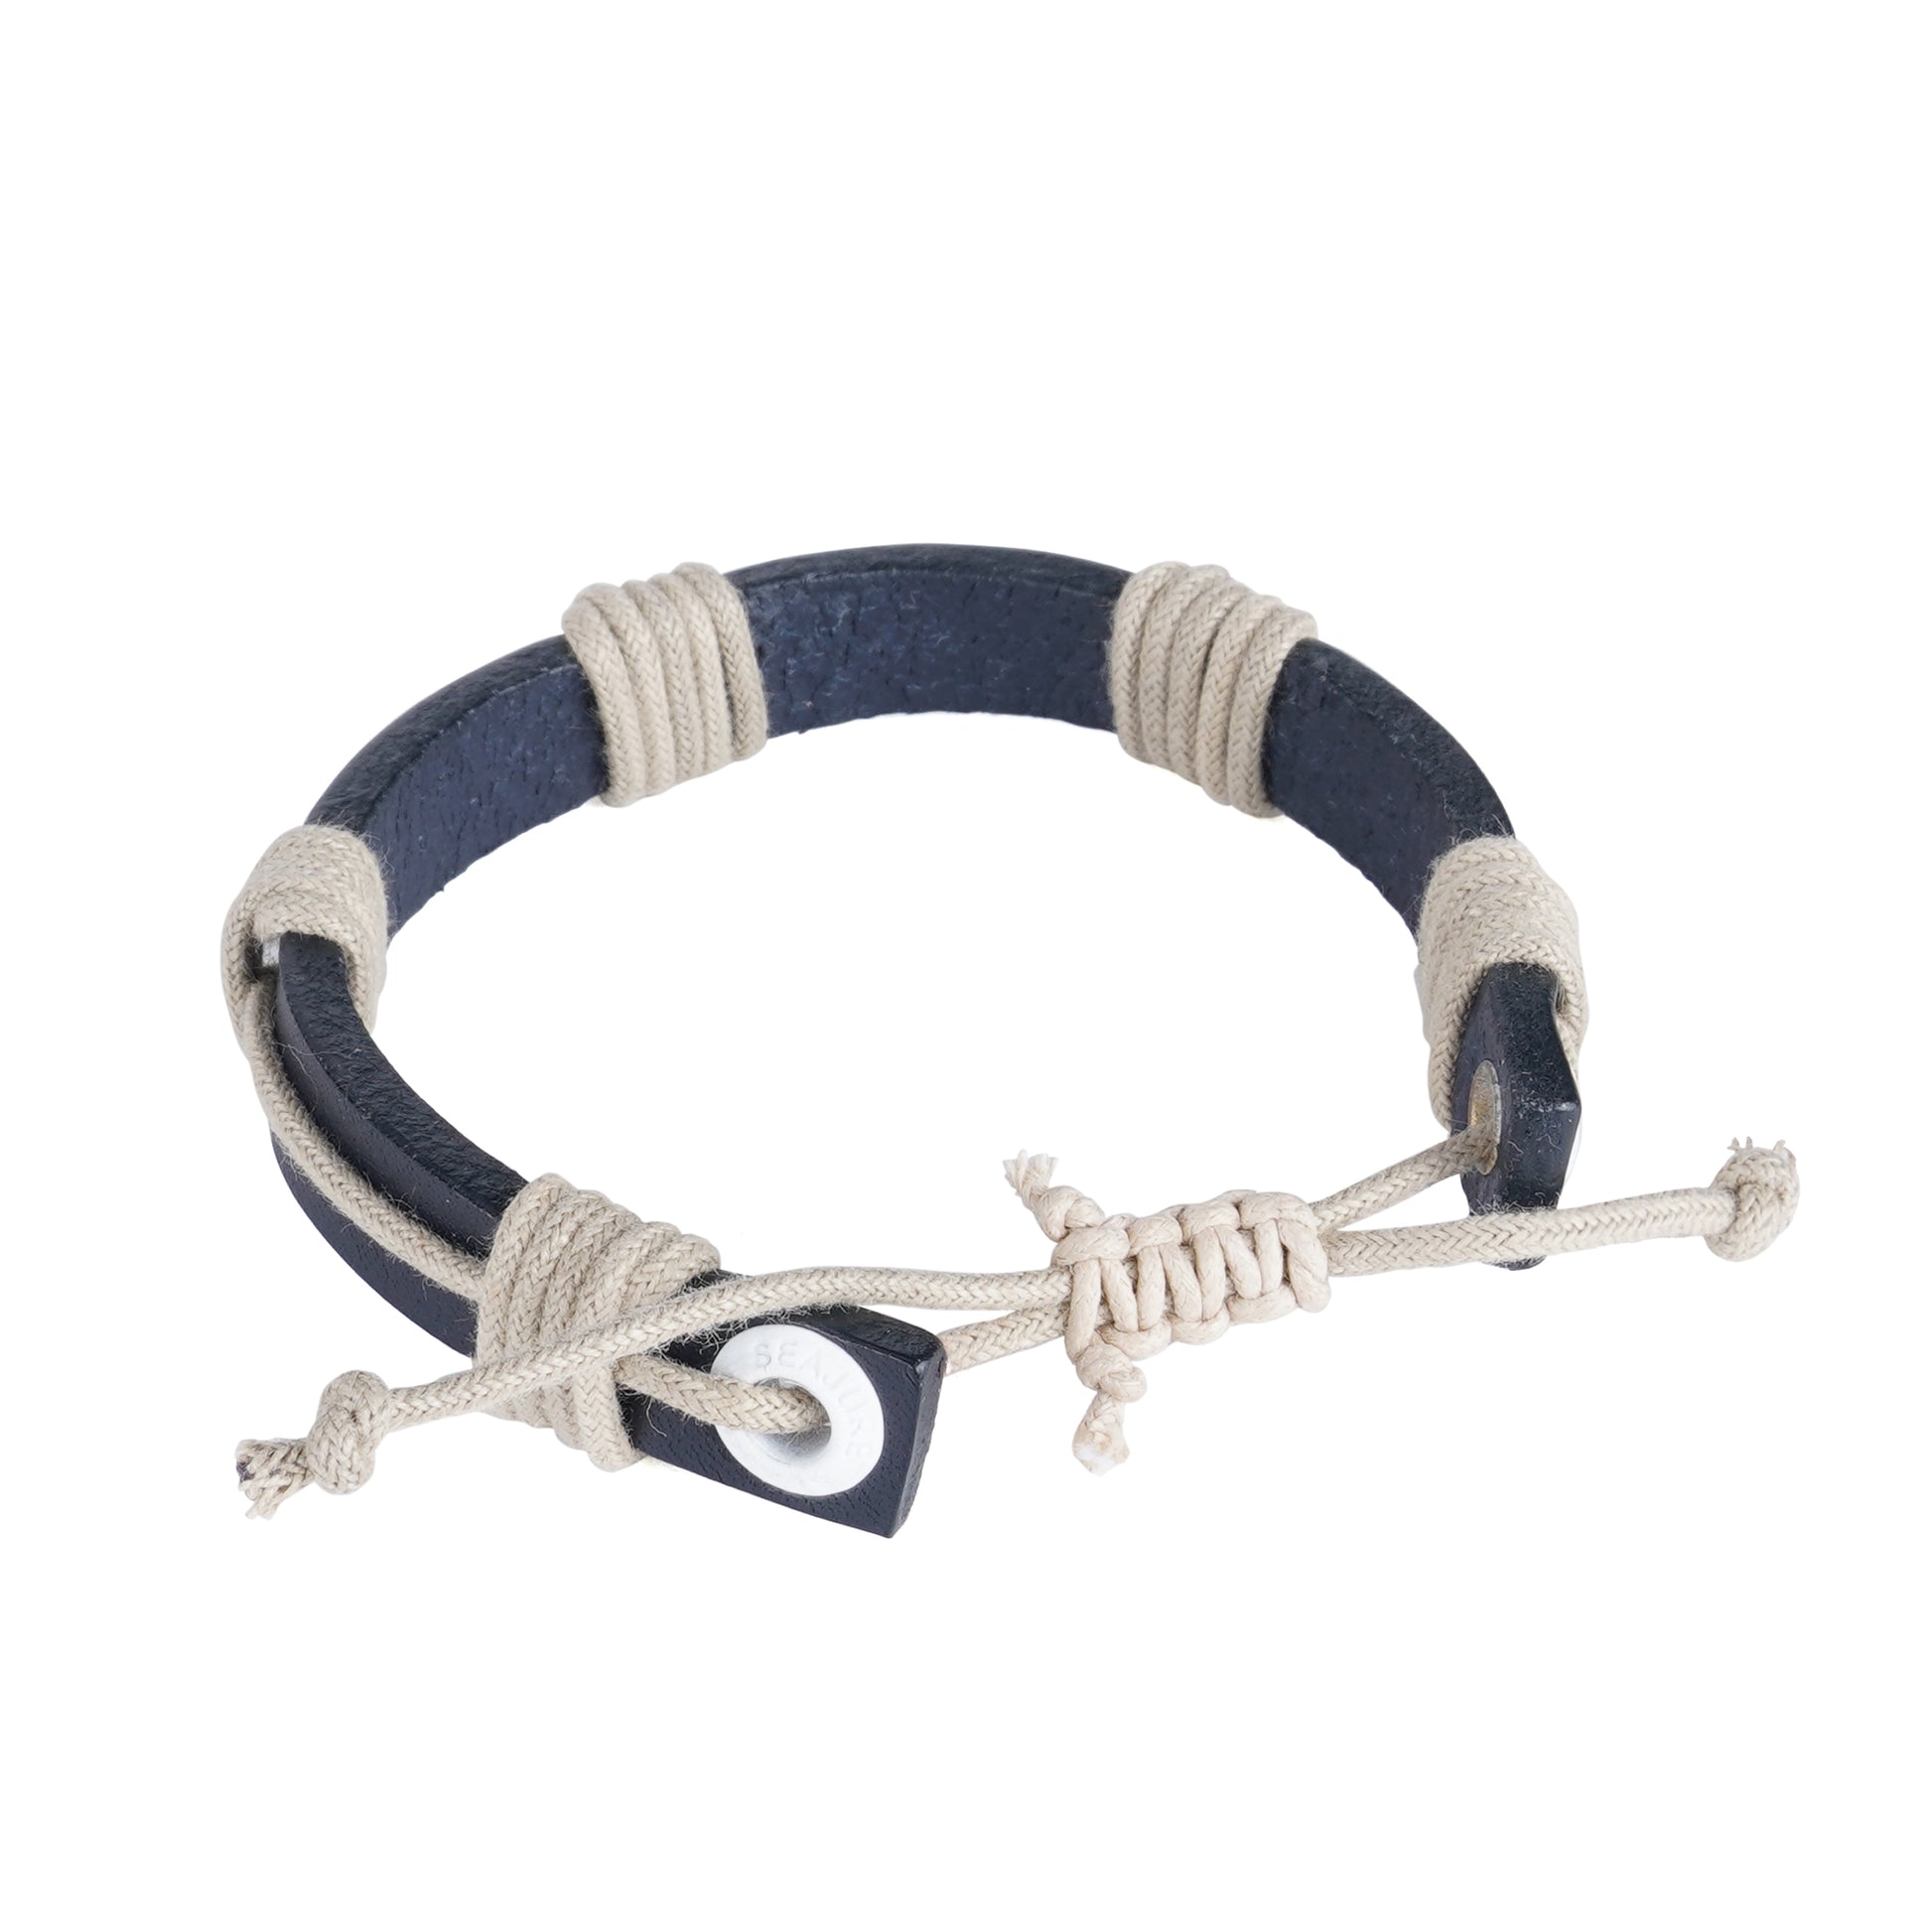 Nautical Rope and Leather Motuo Bracelet Seajure